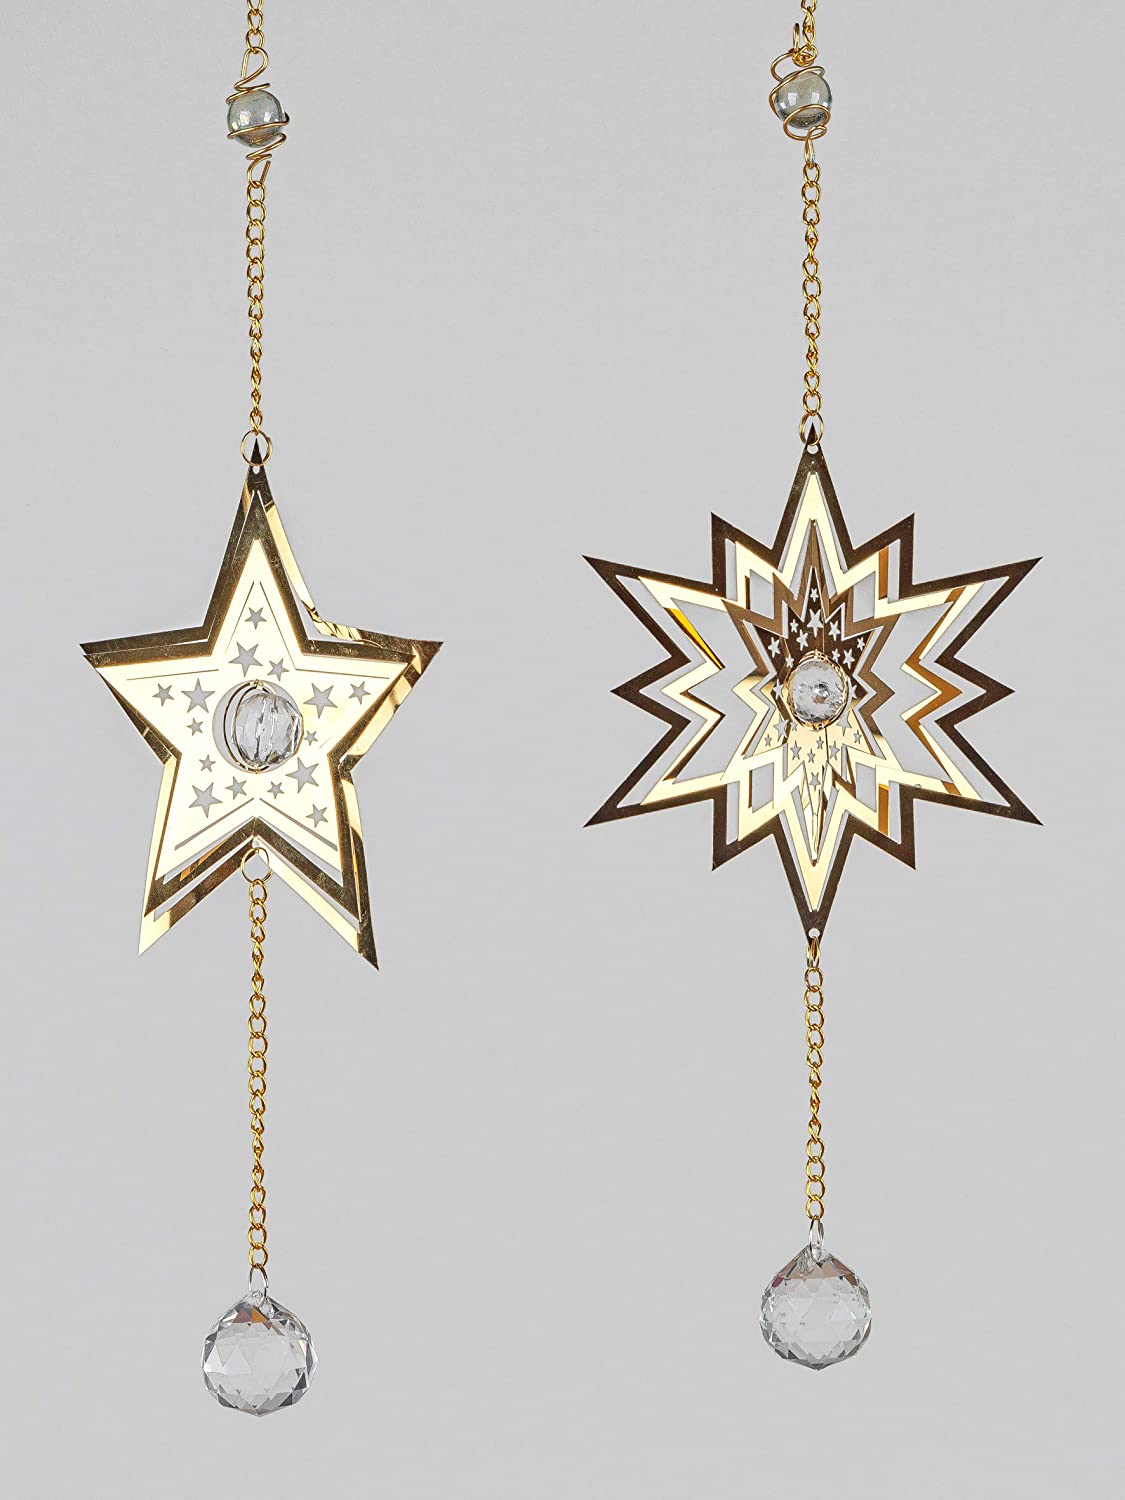 Formano 2-Piece Hanging Star Decorative Hangers Gold Design 49 Cm Christmas